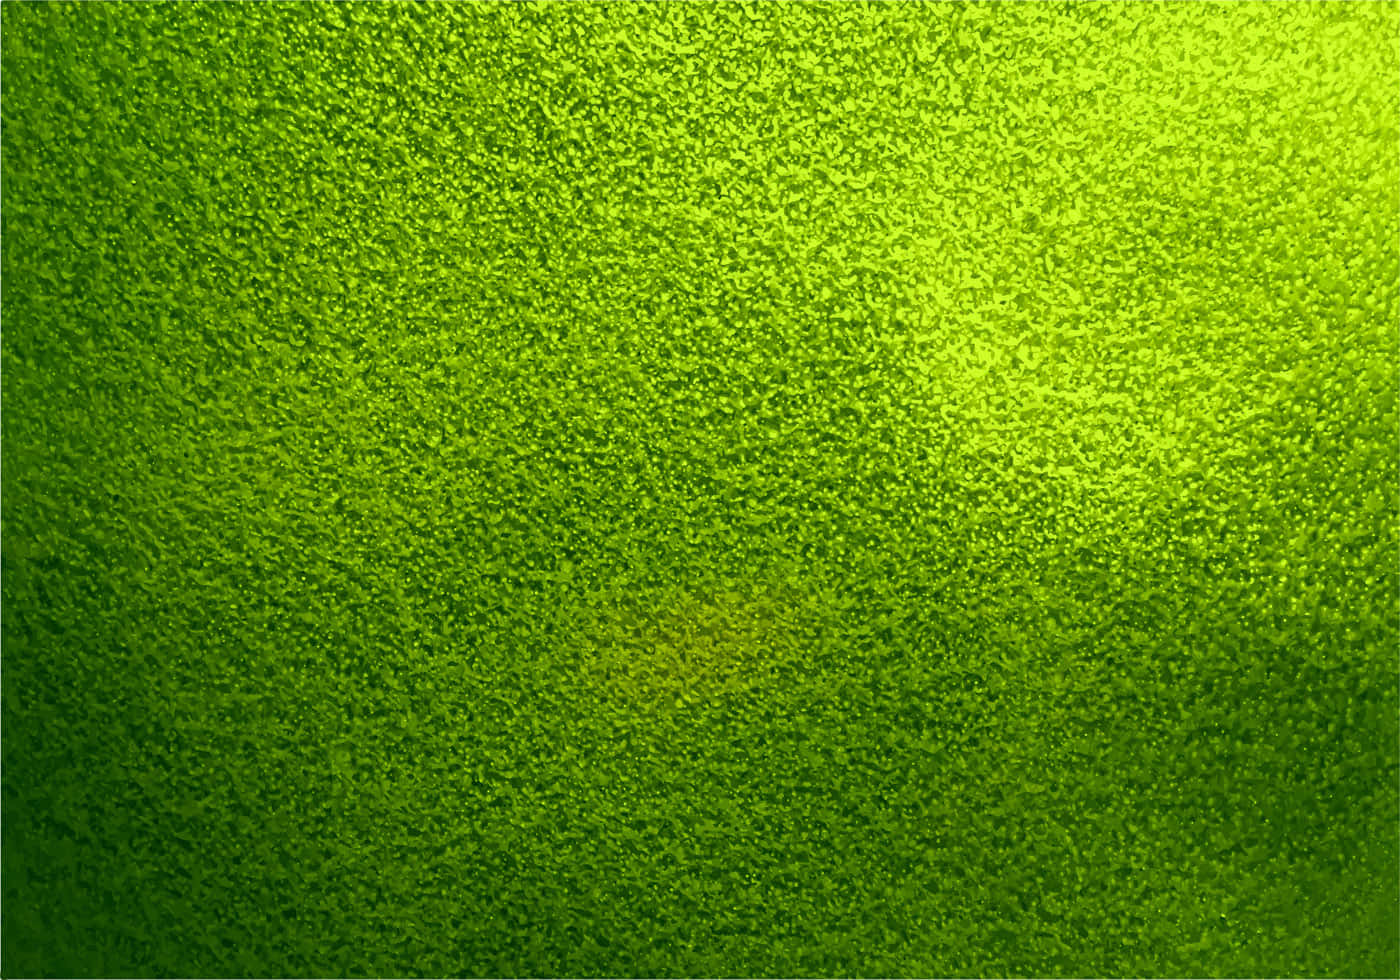 A Verdent Green Background